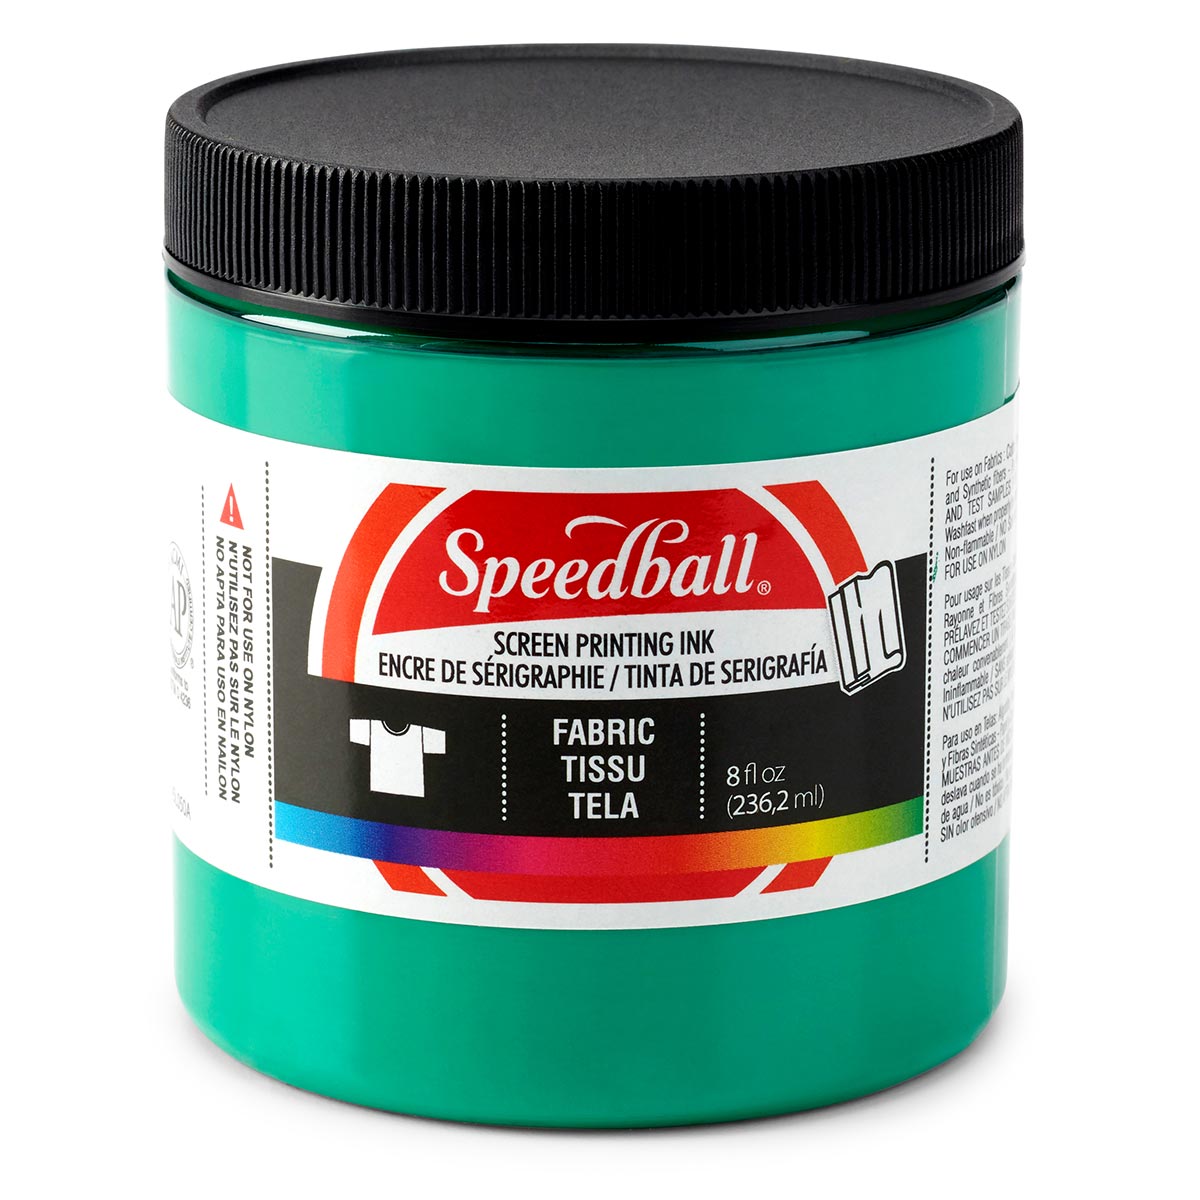 Speedball-Encre de sérigraphie en tissu 236ml (8oz) -Vert